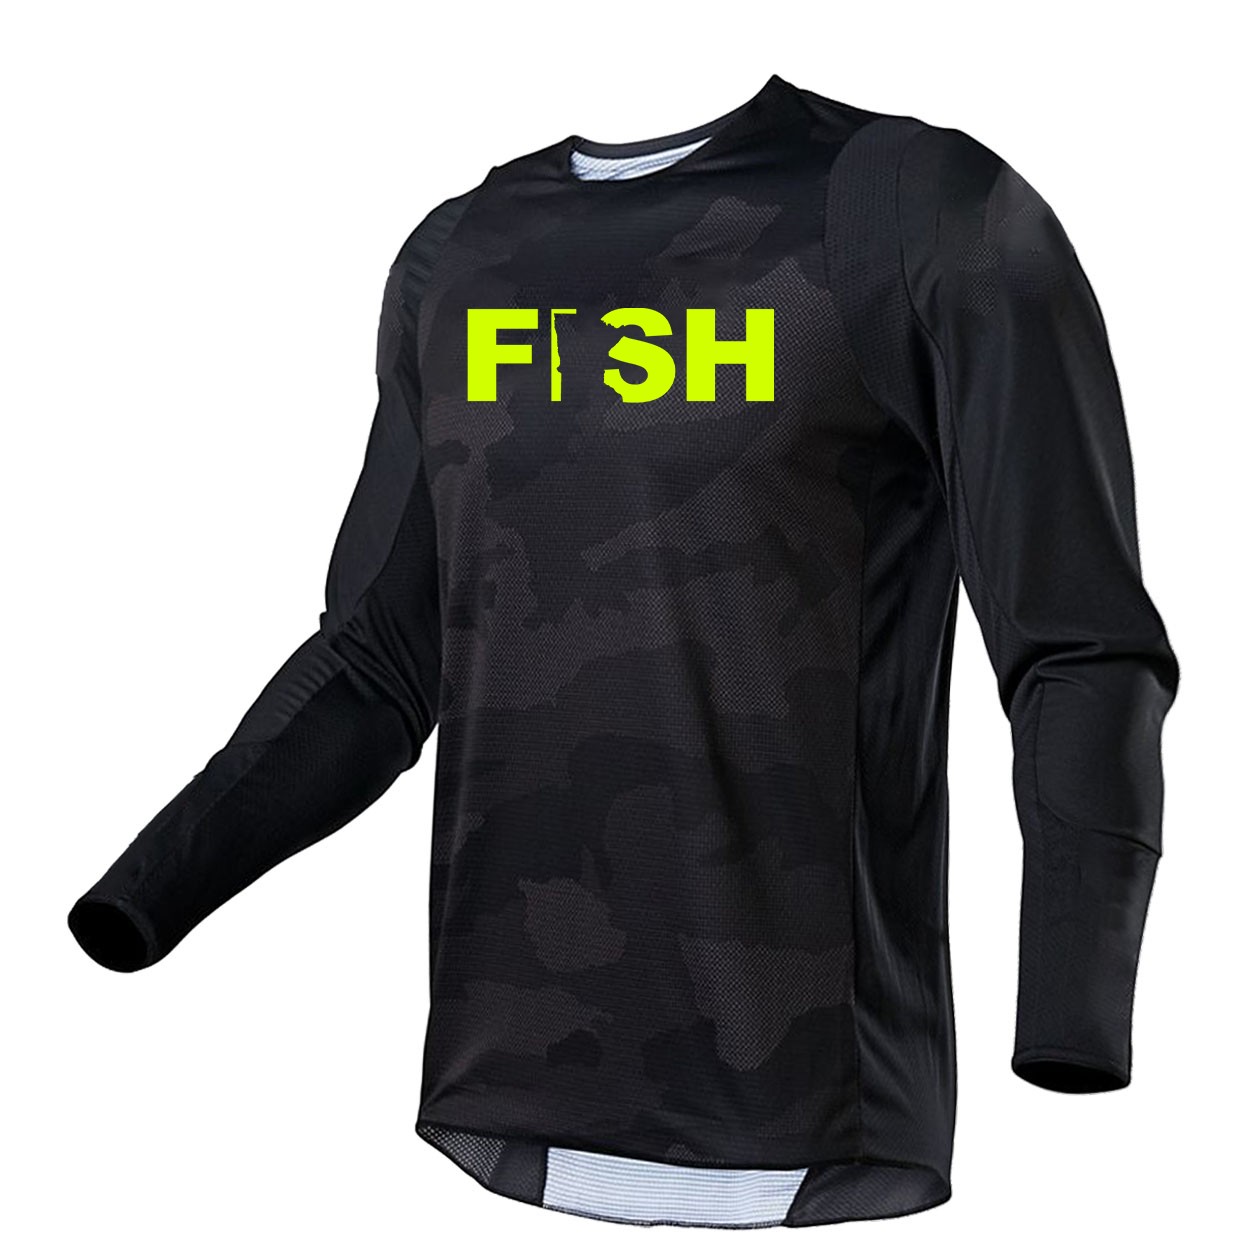 Fish Minnesota Classic Performance Jersey Long Sleeve Shirt Black Camo (Hi-Vis Logo)